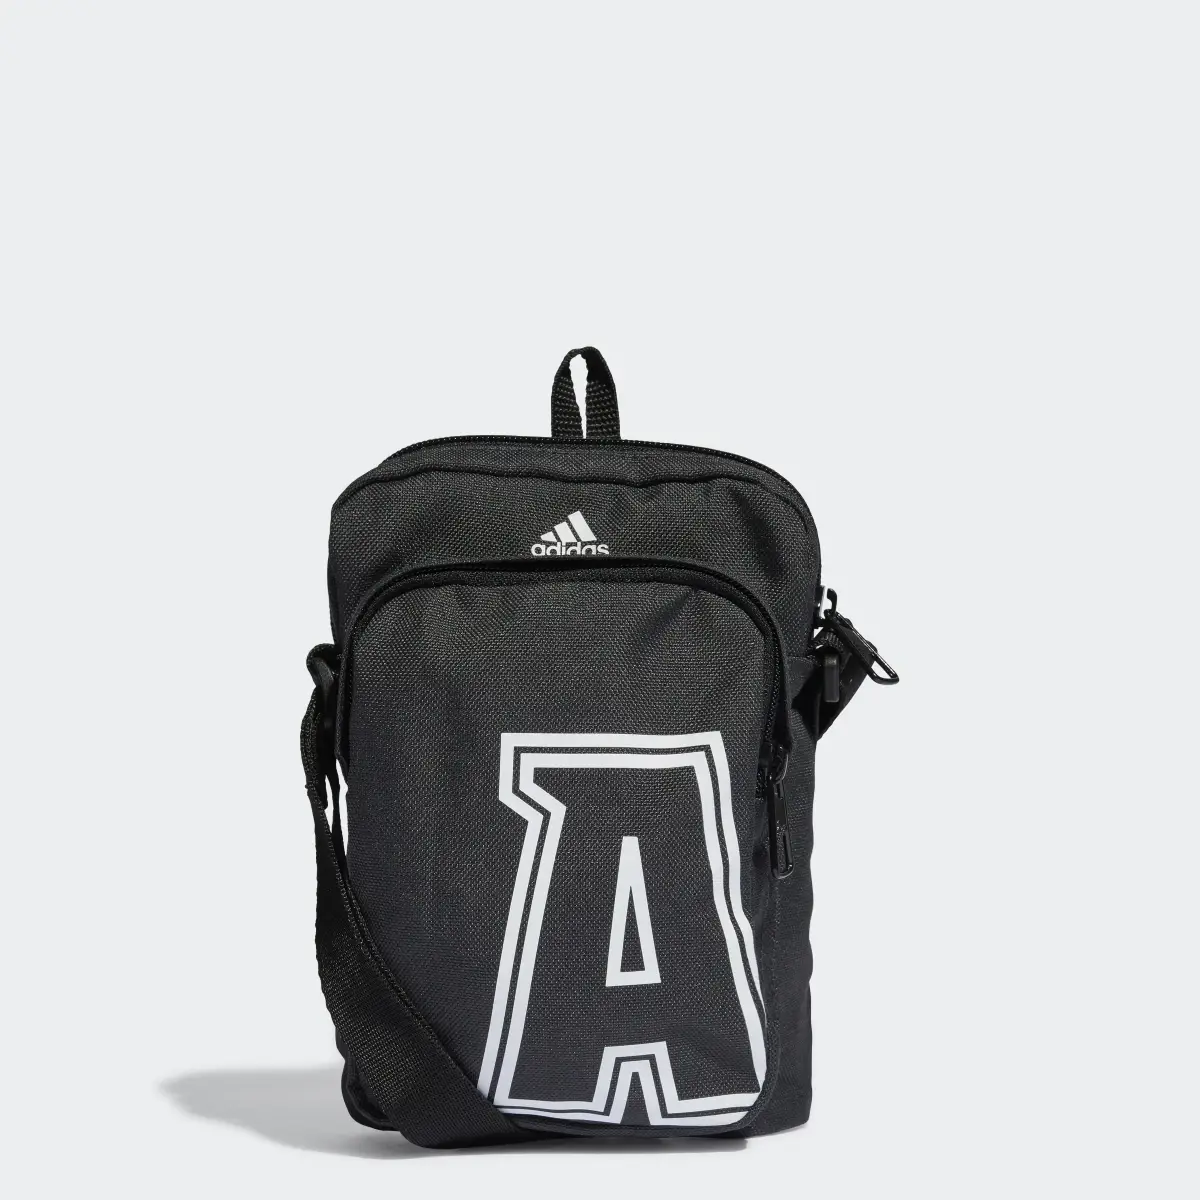 Adidas Classic Brand Love Initial Print Organizer Bag. 1